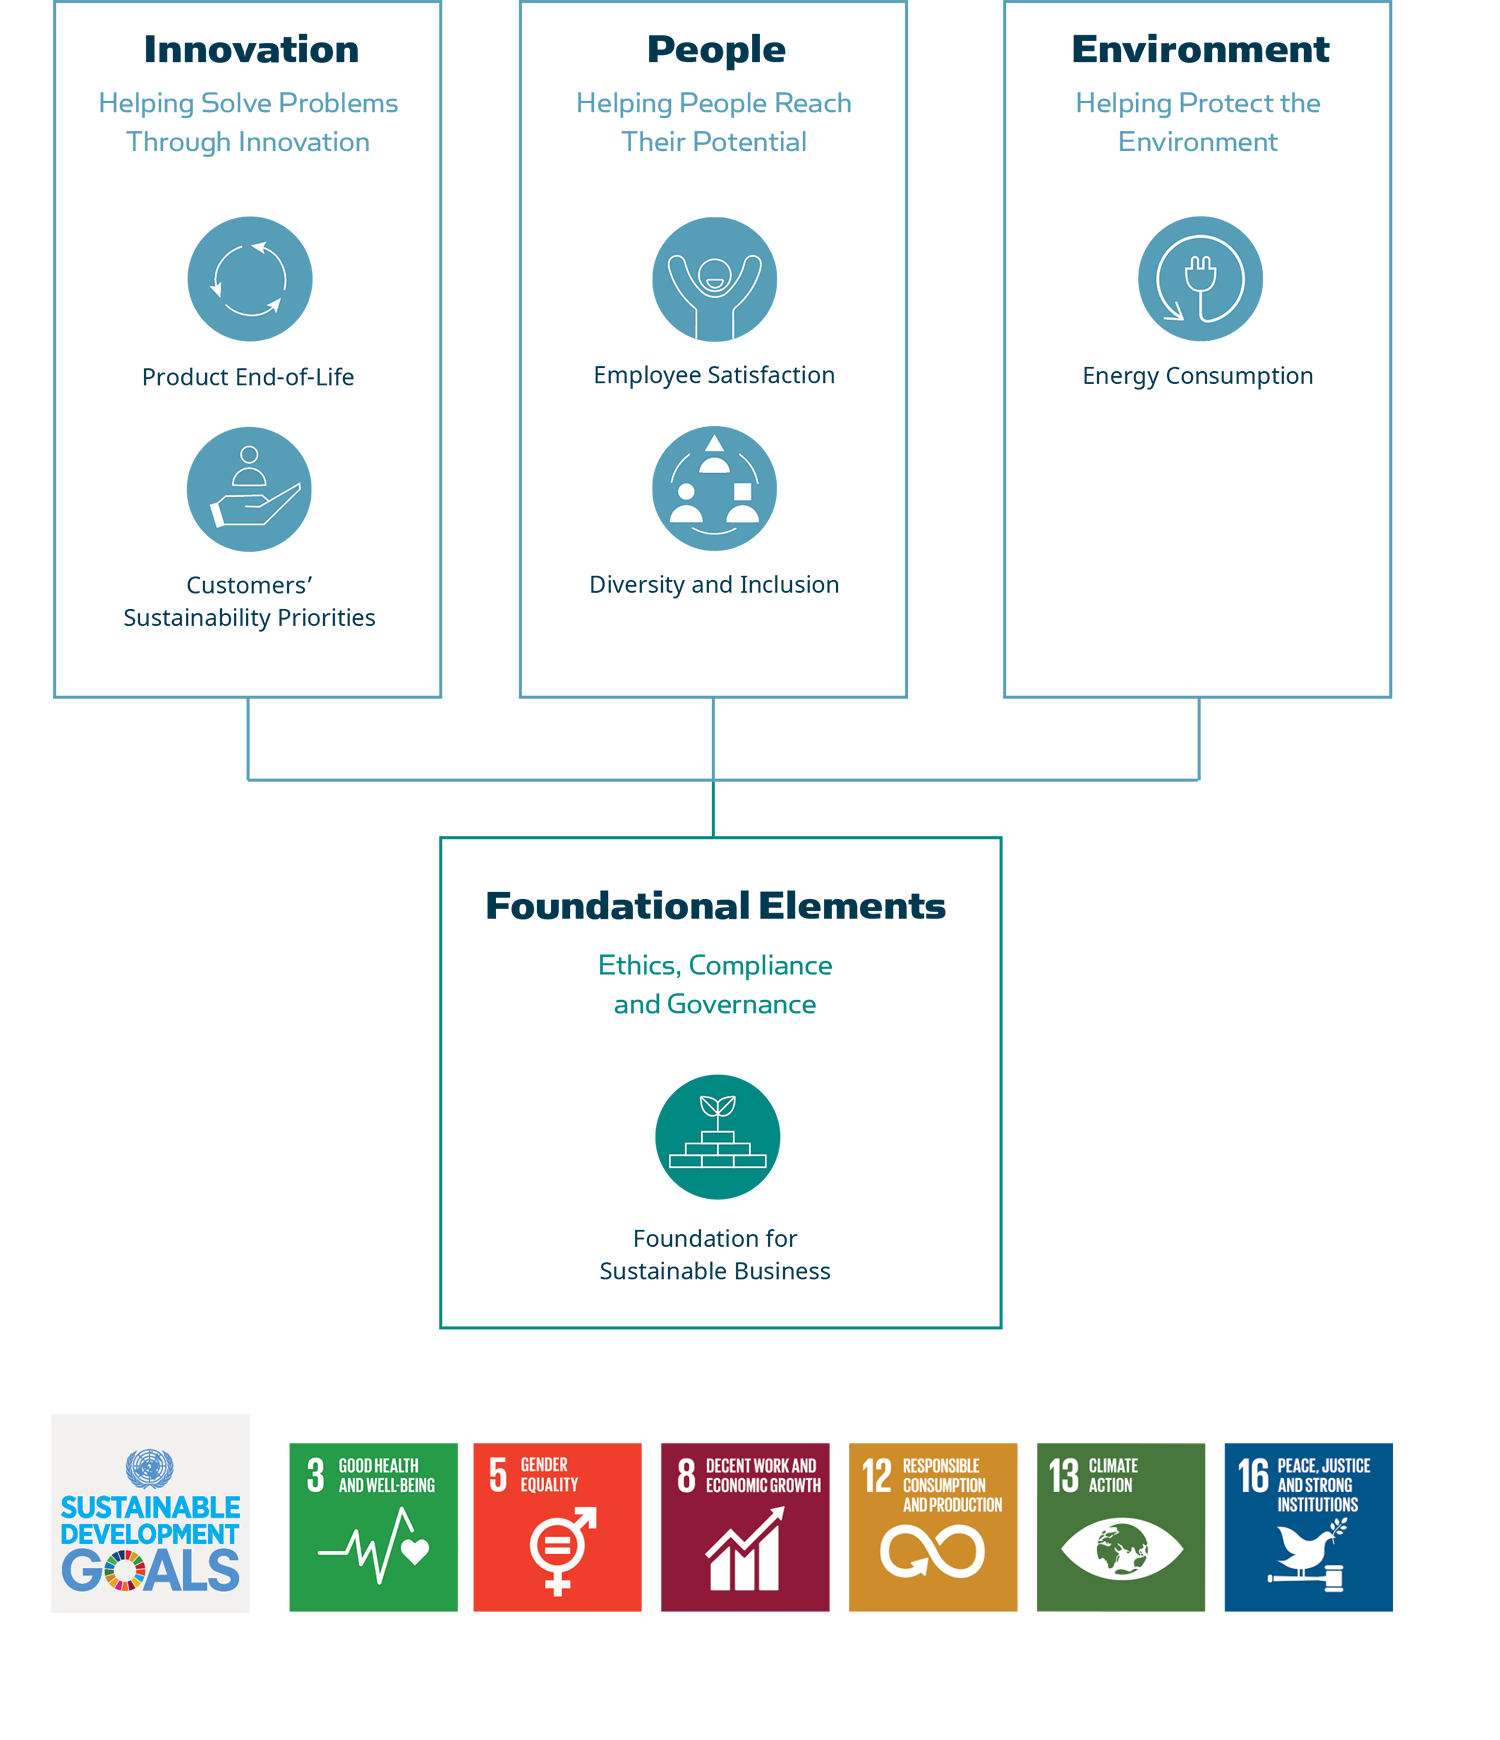 Sustainability icons - Towards the UN Sustainable Development Goals